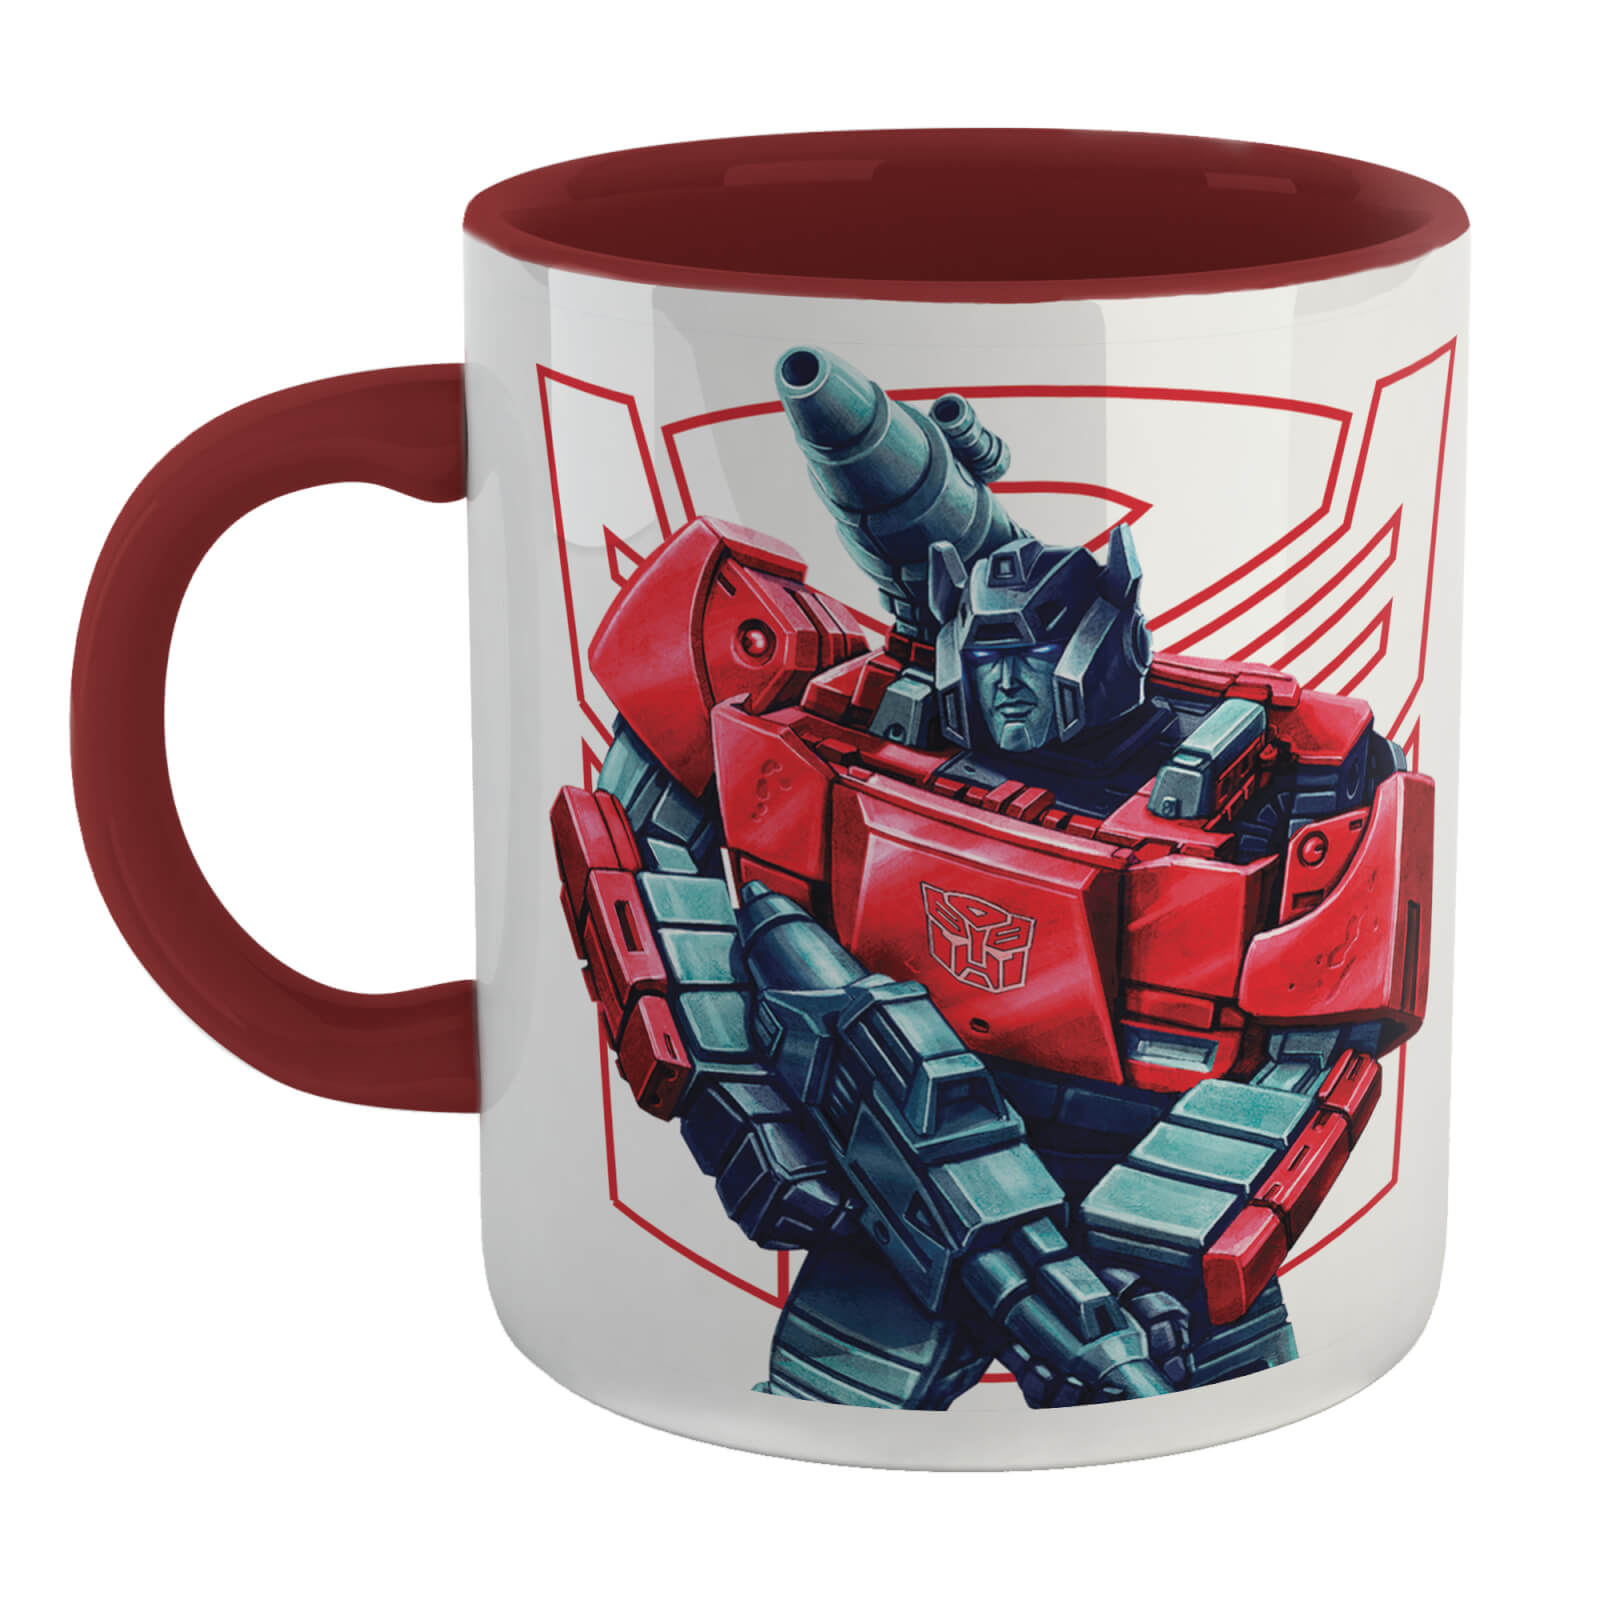 Transformers Sideswipe Mug - White/Burgundy